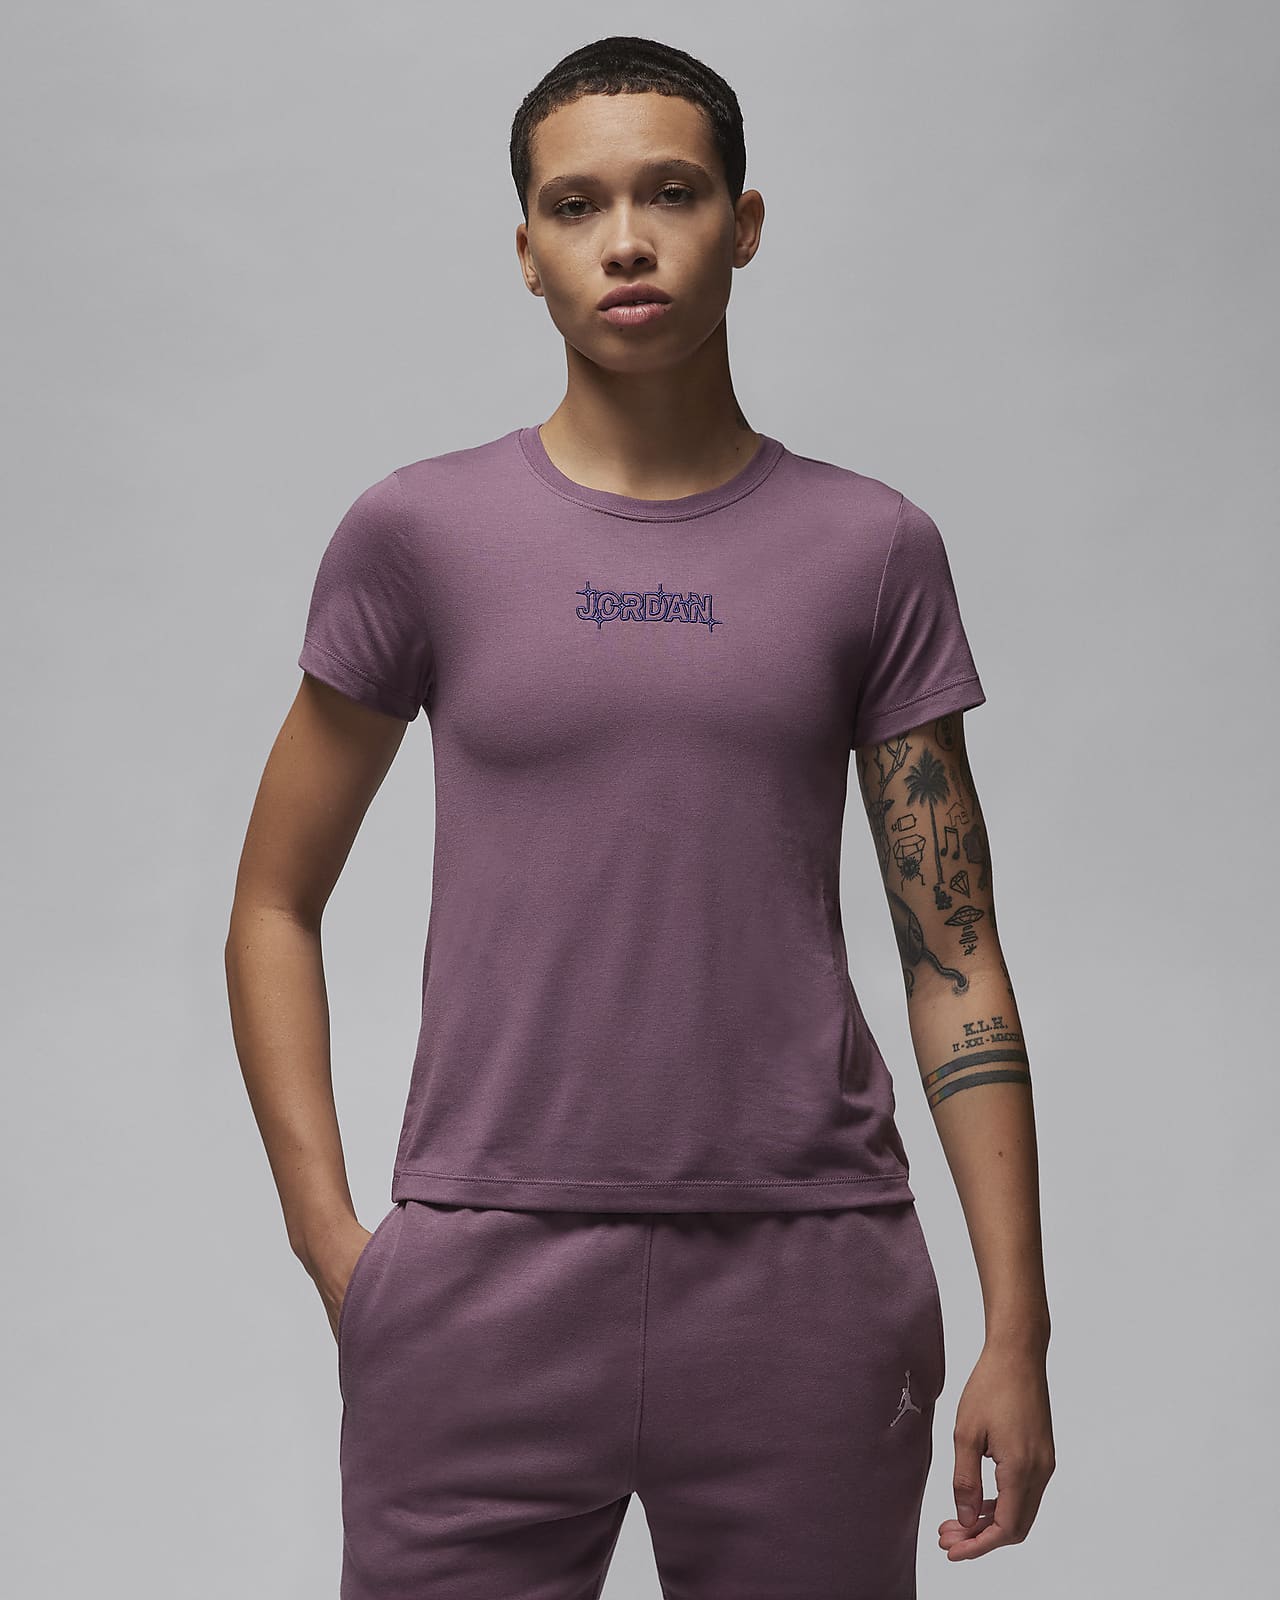 Jordan Women's Slim Graphic T-Shirt